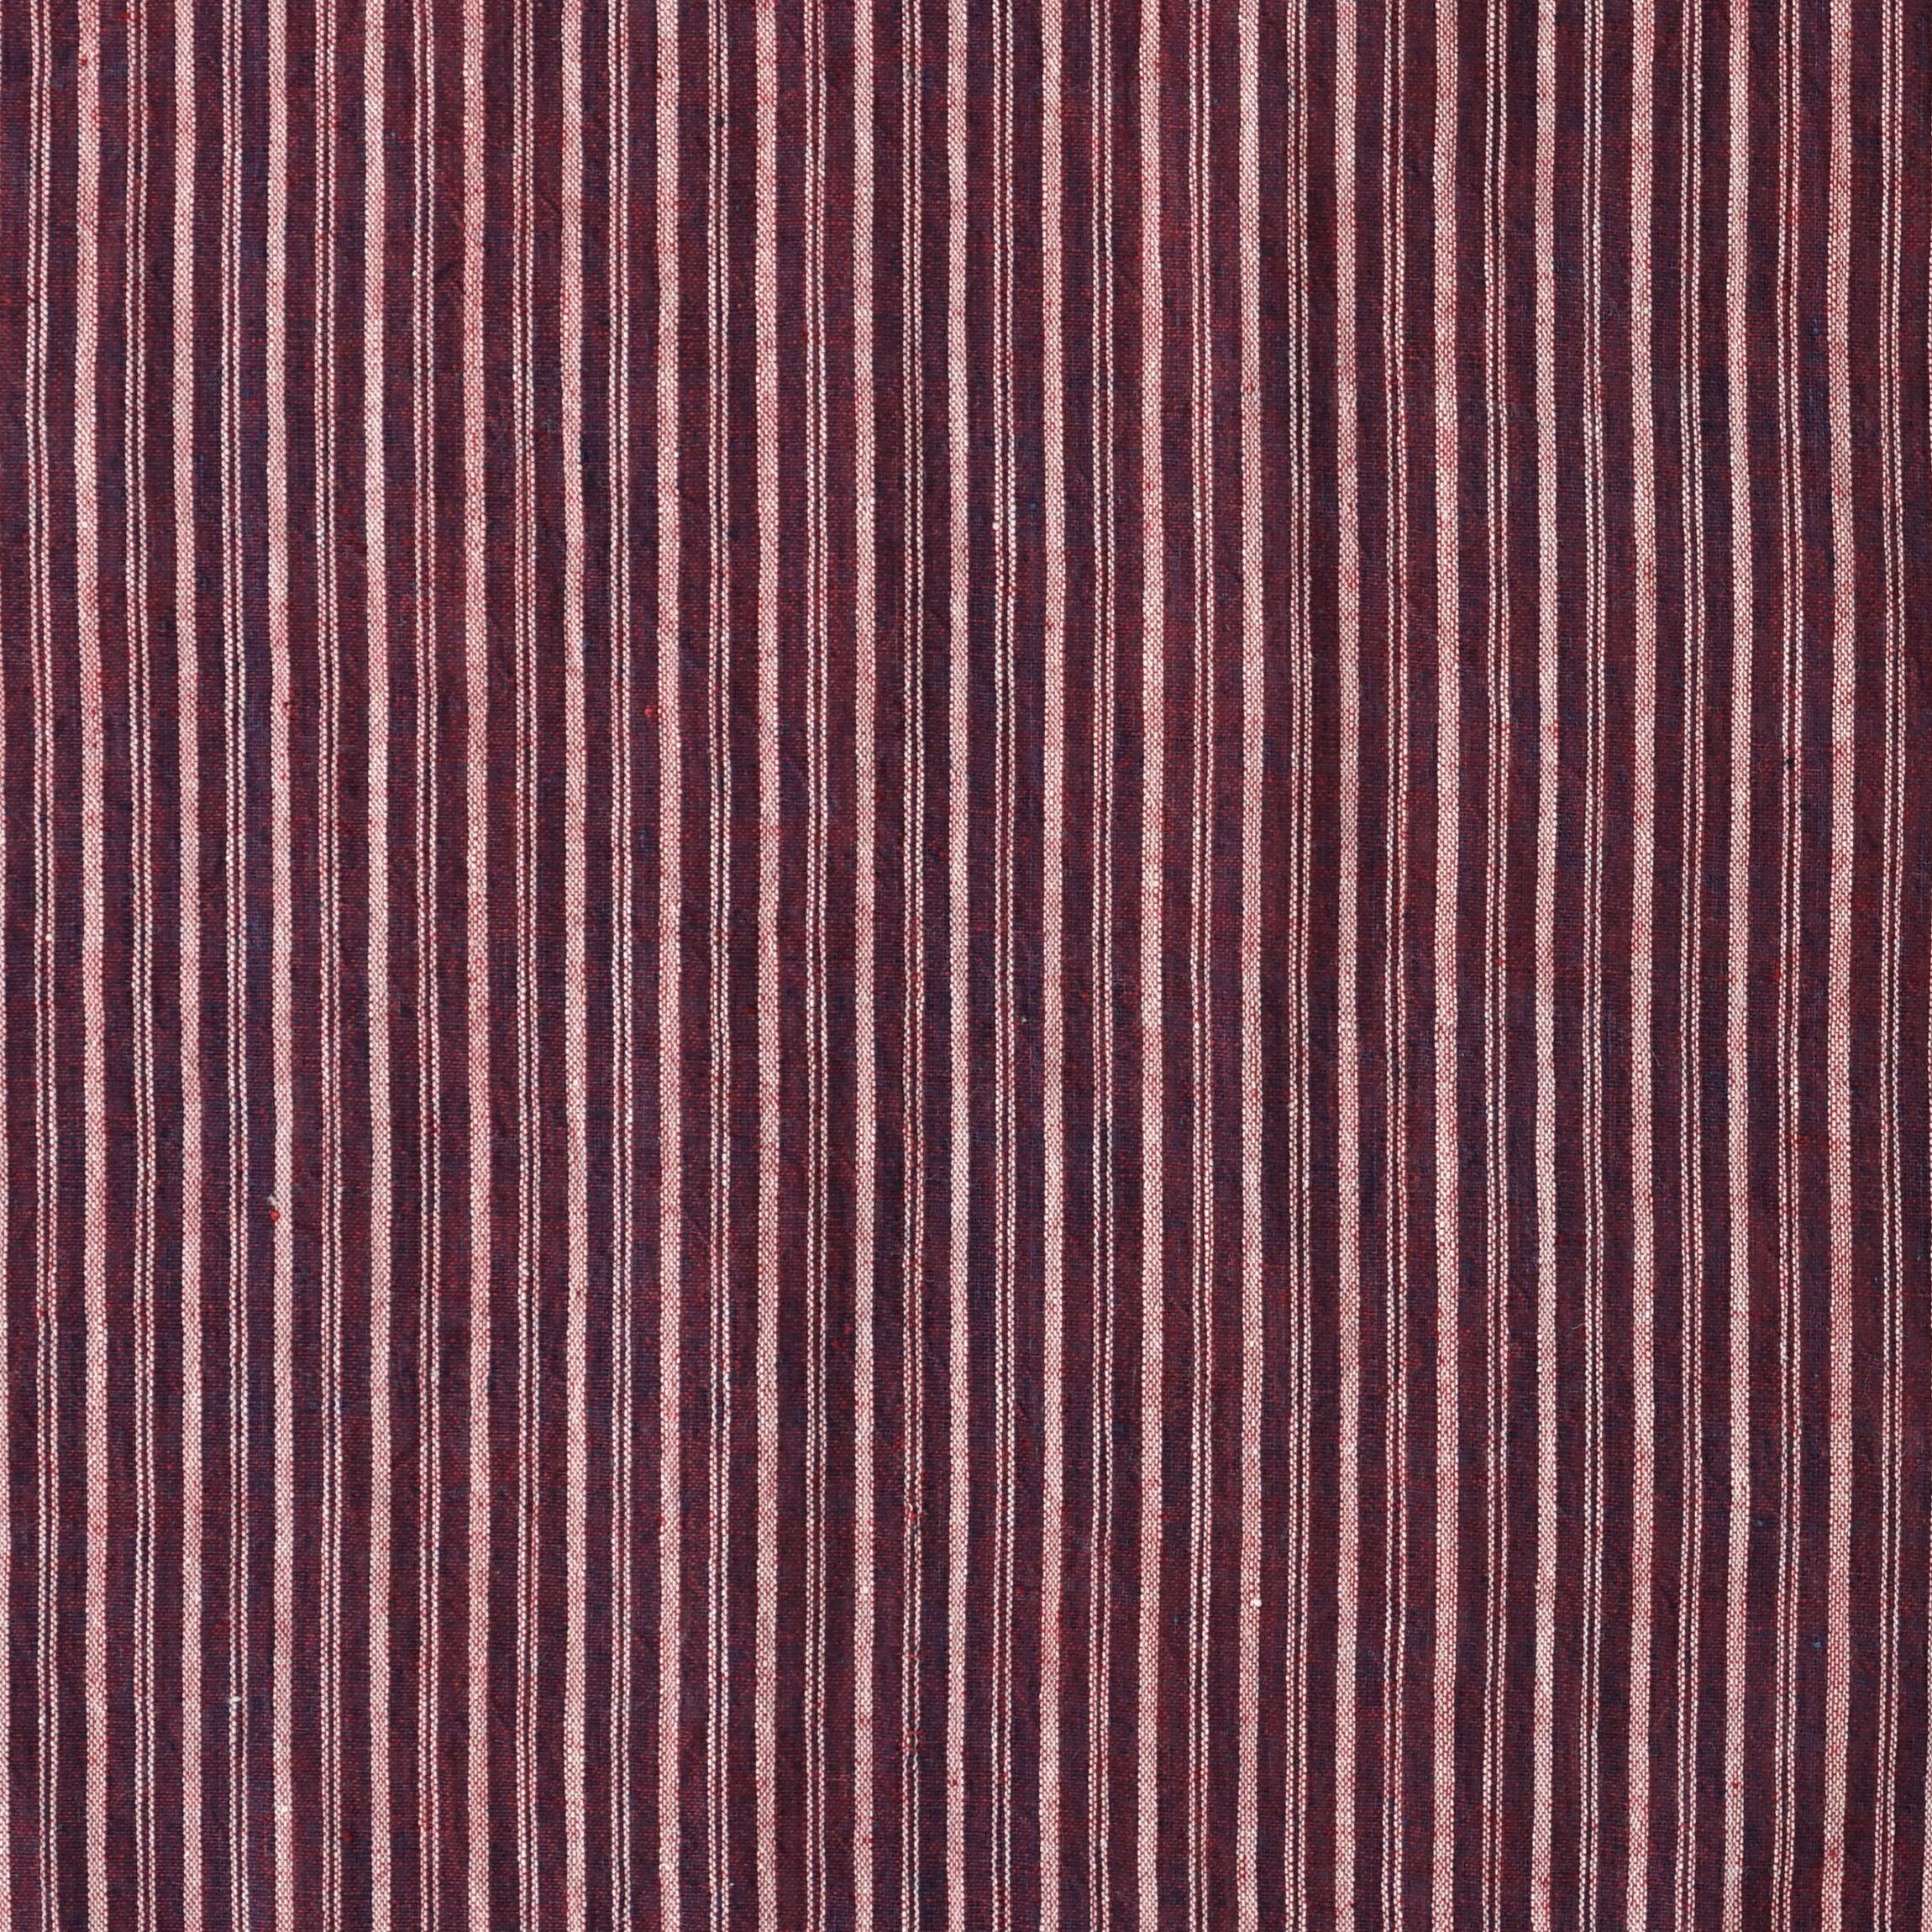 100 % Handloom Woven Cotton - Cross Colour - Pomegranate Yellow Warp, Red Alizarin Weft - Flat